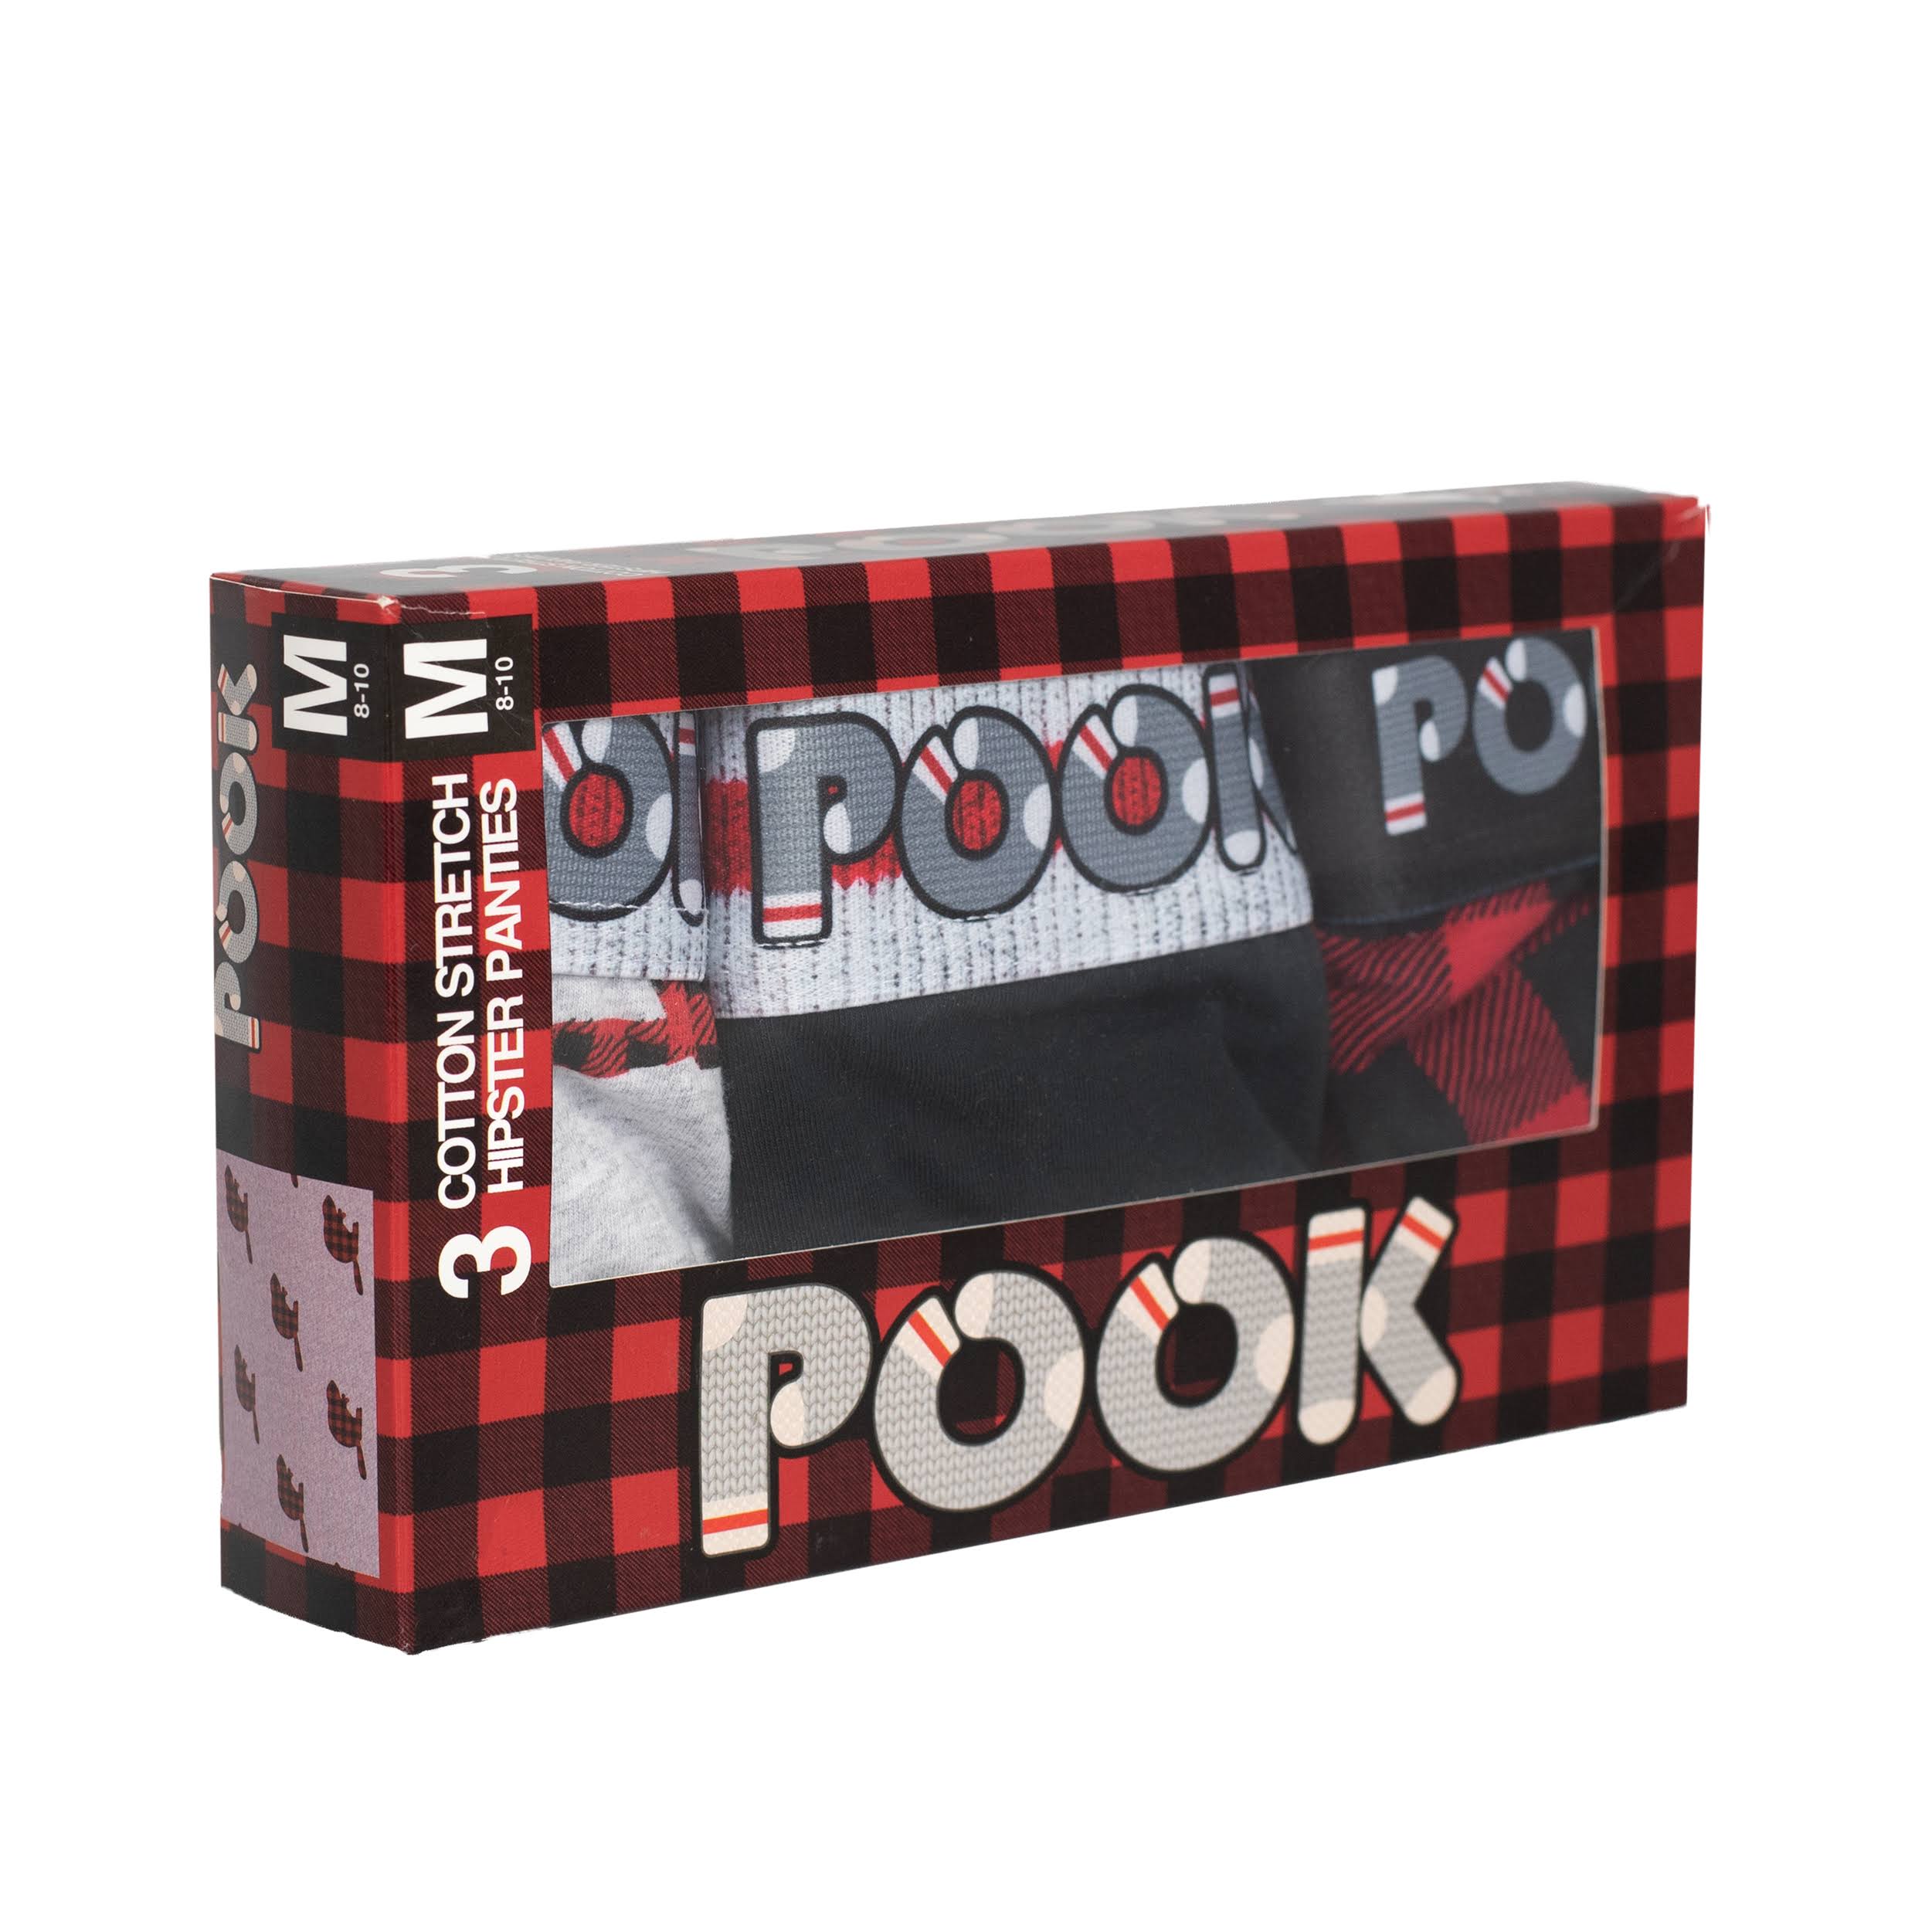 Pook Women's Underwear (3 Pack) - Black, Red Plaid, Beaver M